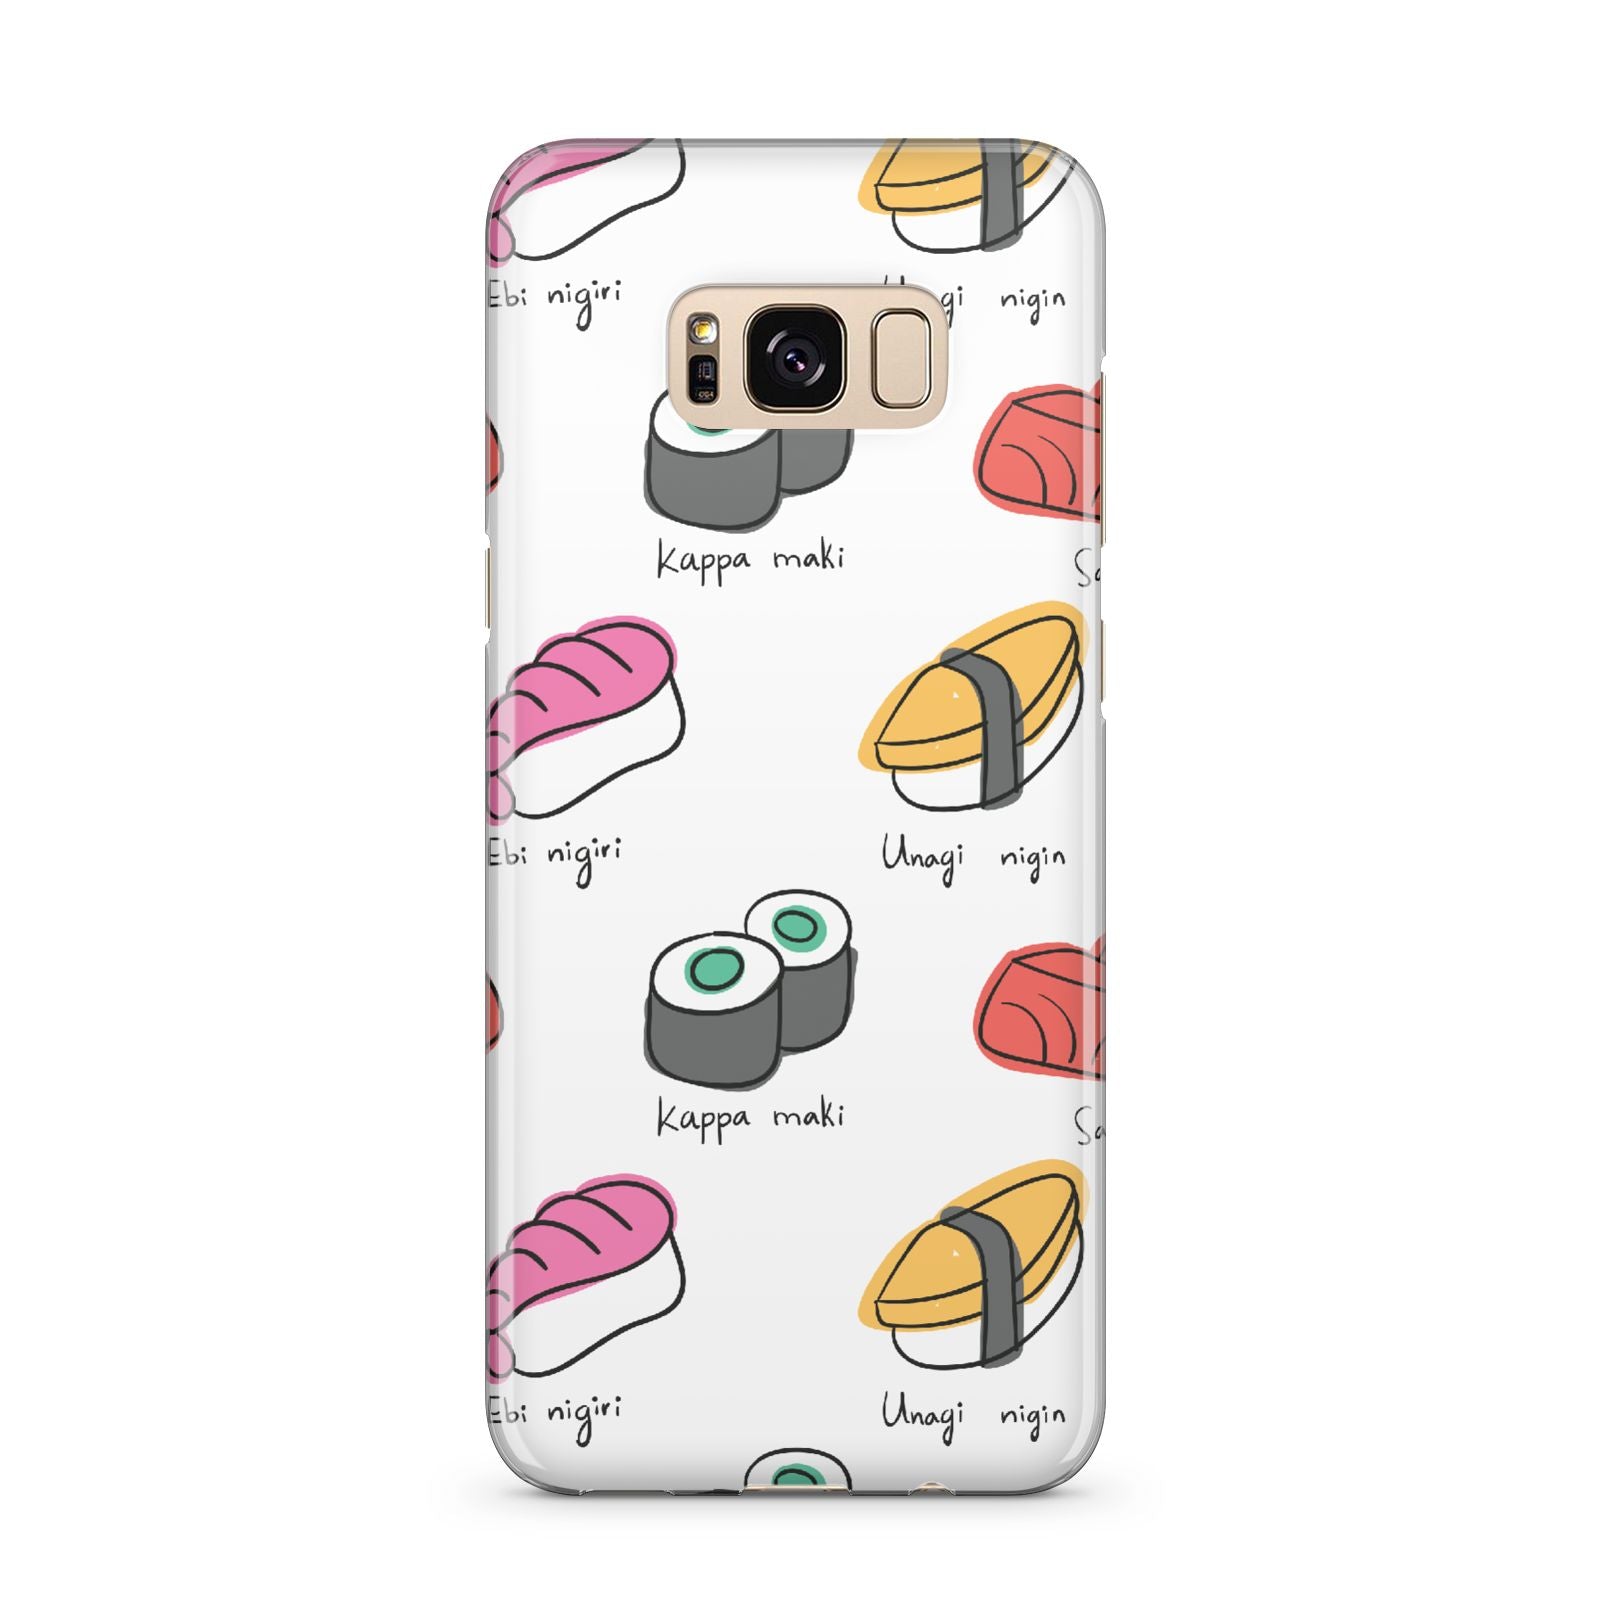 Sashimi Kappa Maki Sushi Samsung Galaxy S8 Plus Case